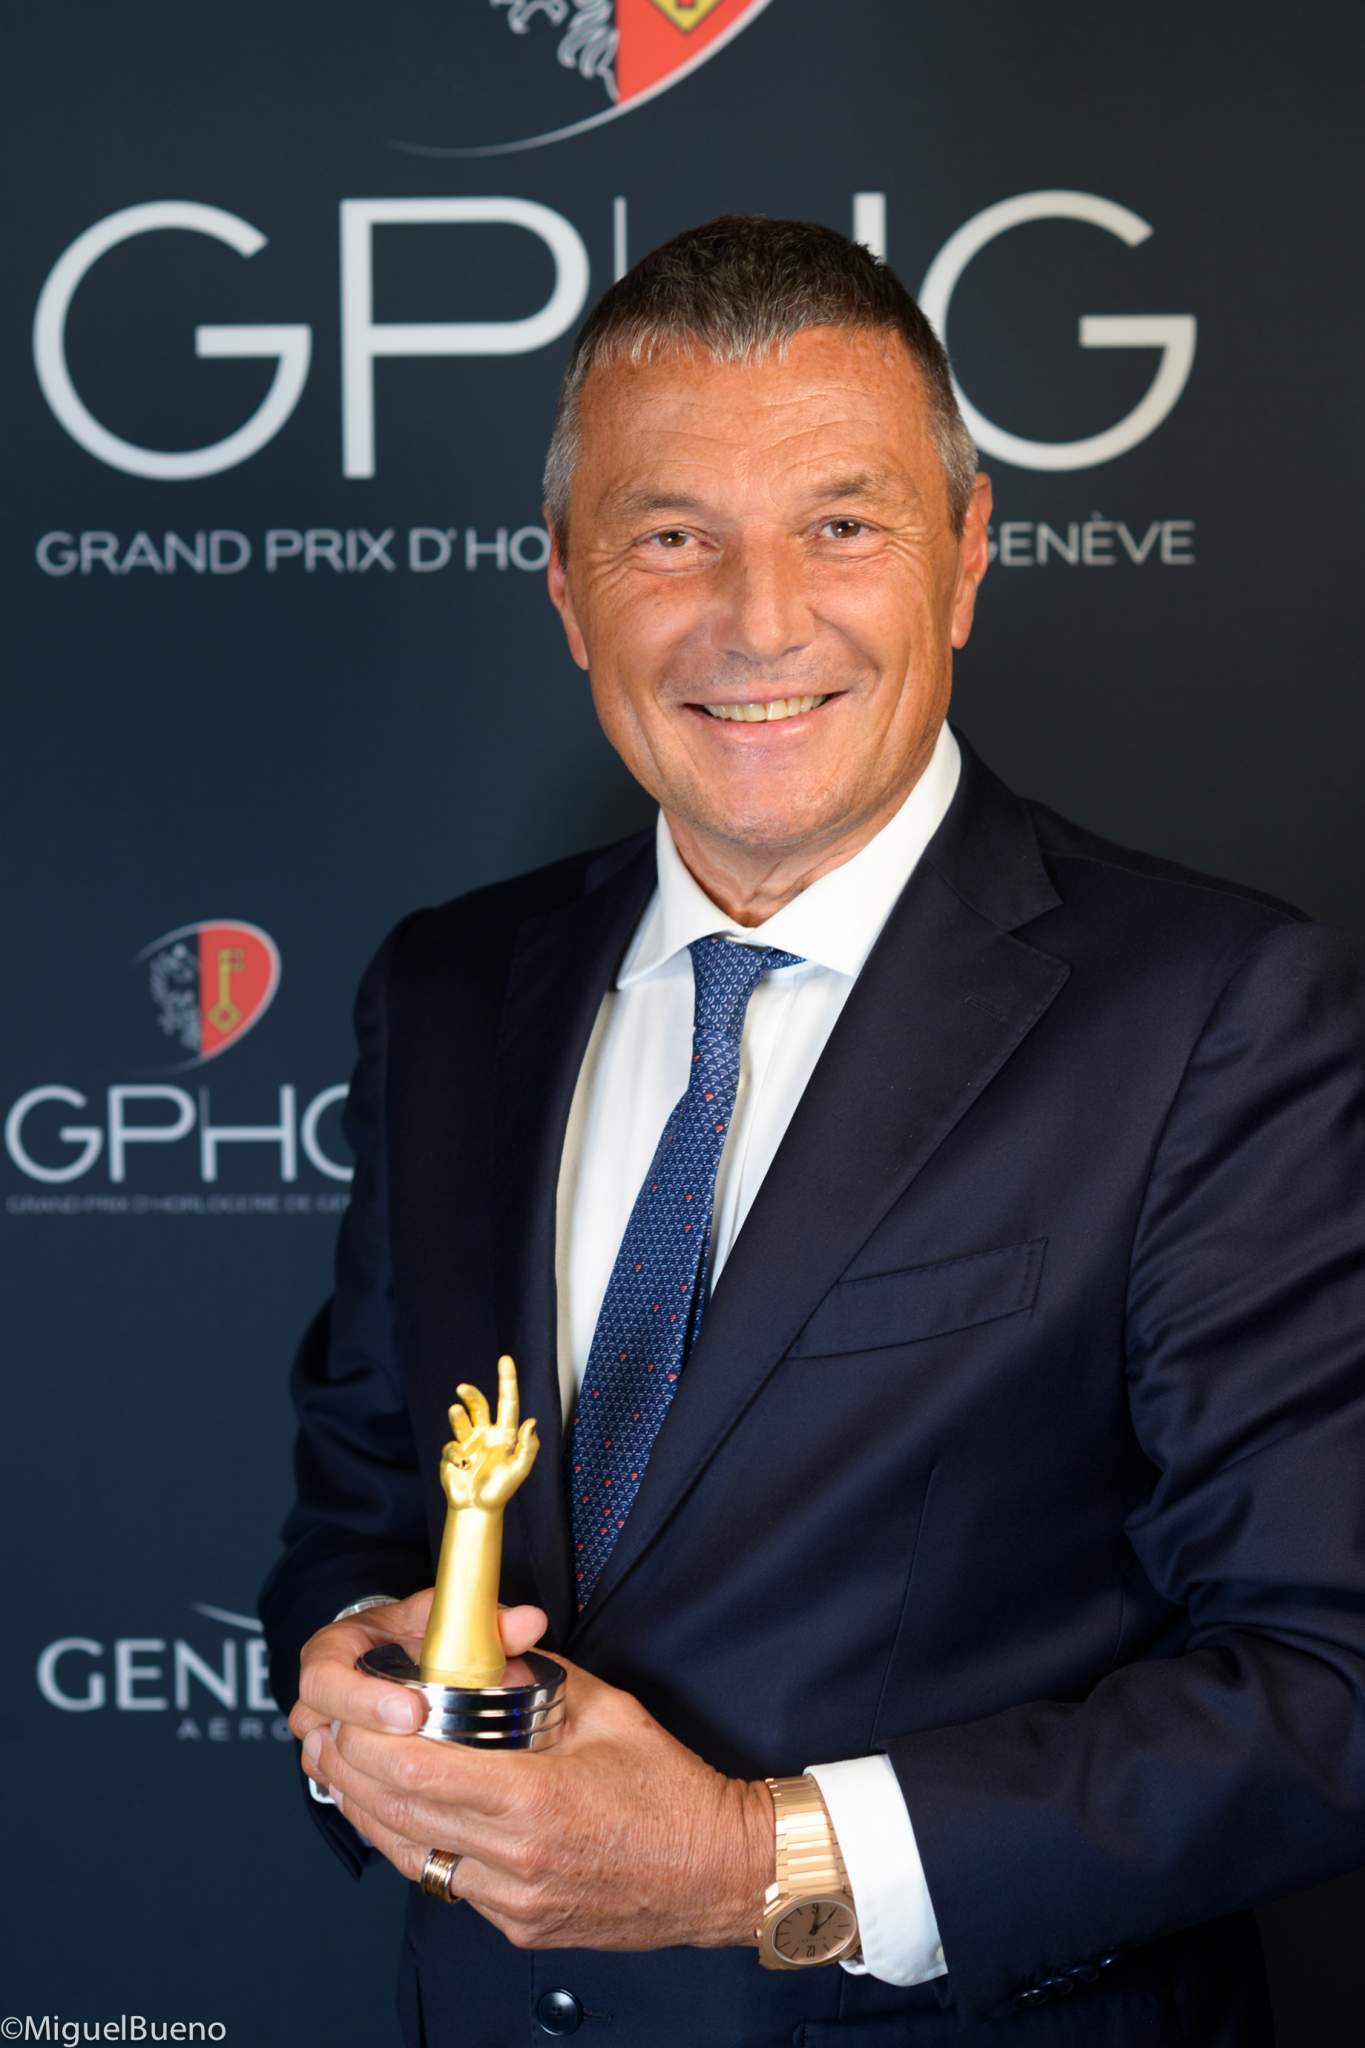 CEO of Bulgari, winner of the Jewellery Watch Prize 2019